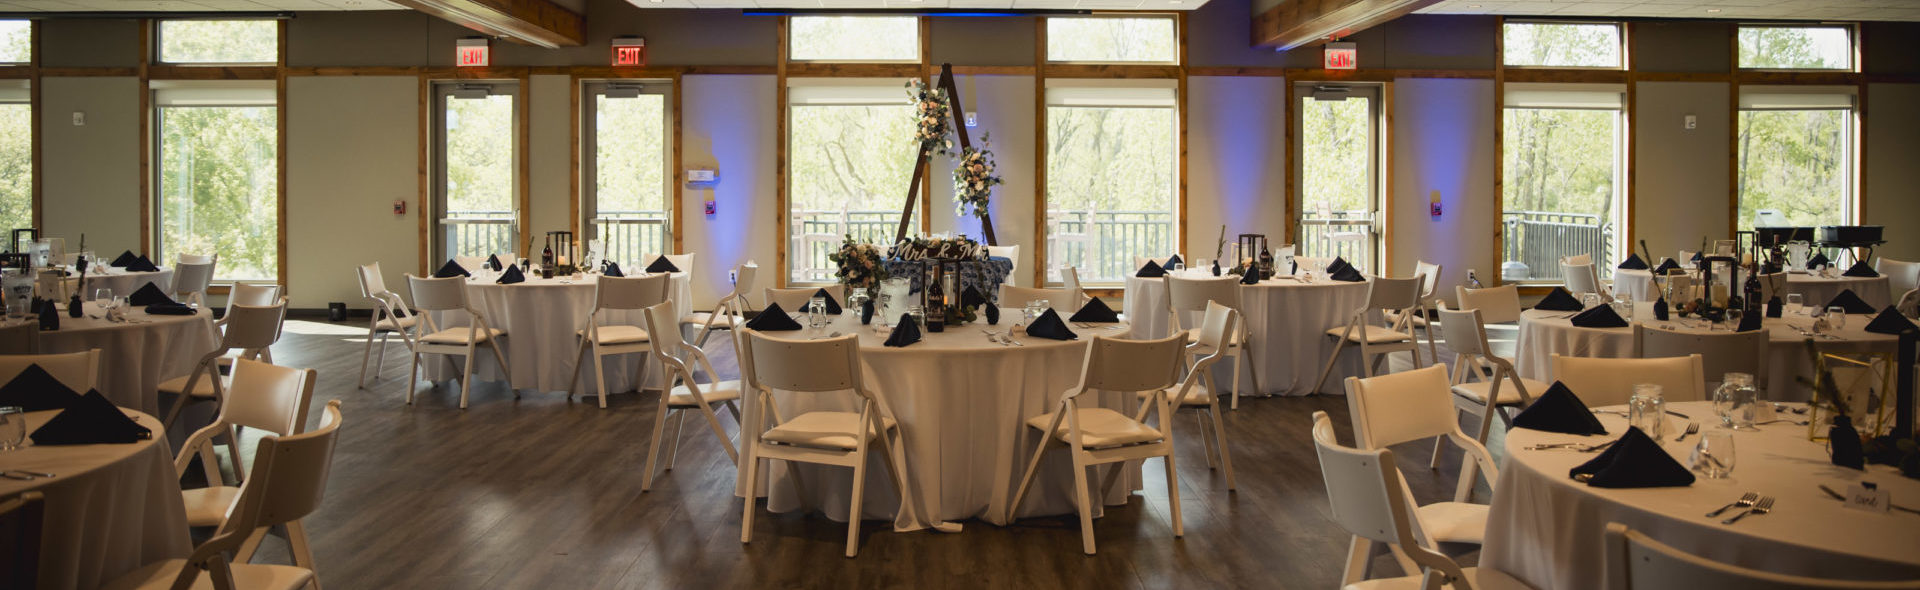 Elegant Fox Valley Wedding & Event Venue